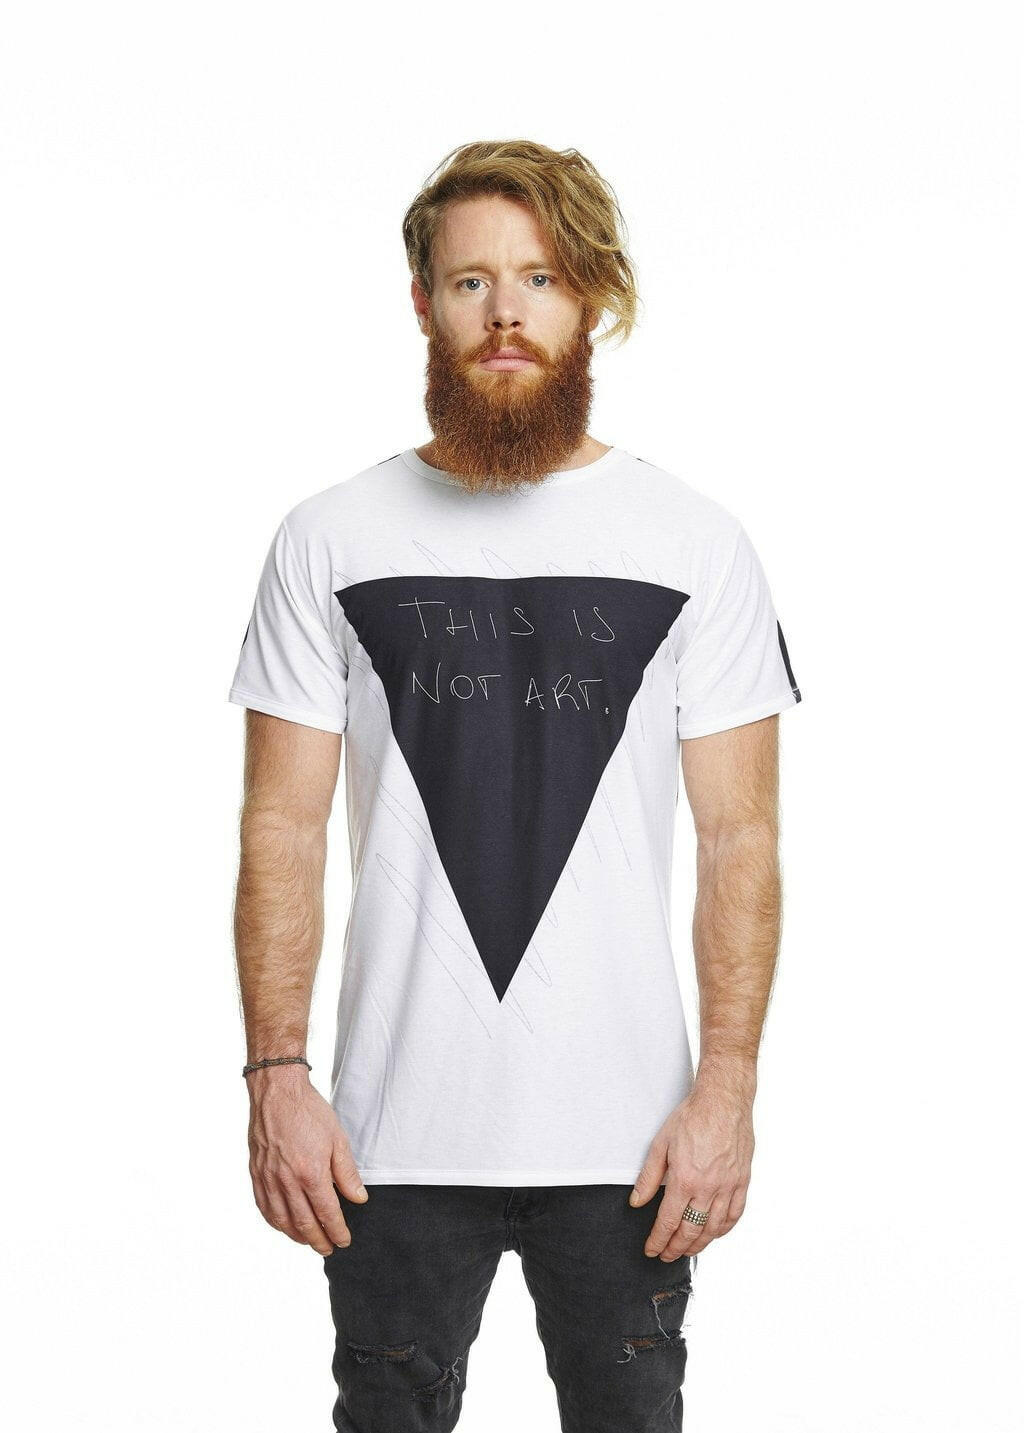 Lemme Know - Uztzu Clothing - Shop Super 4 in 1 T-shirts, Pants and hoodies online!